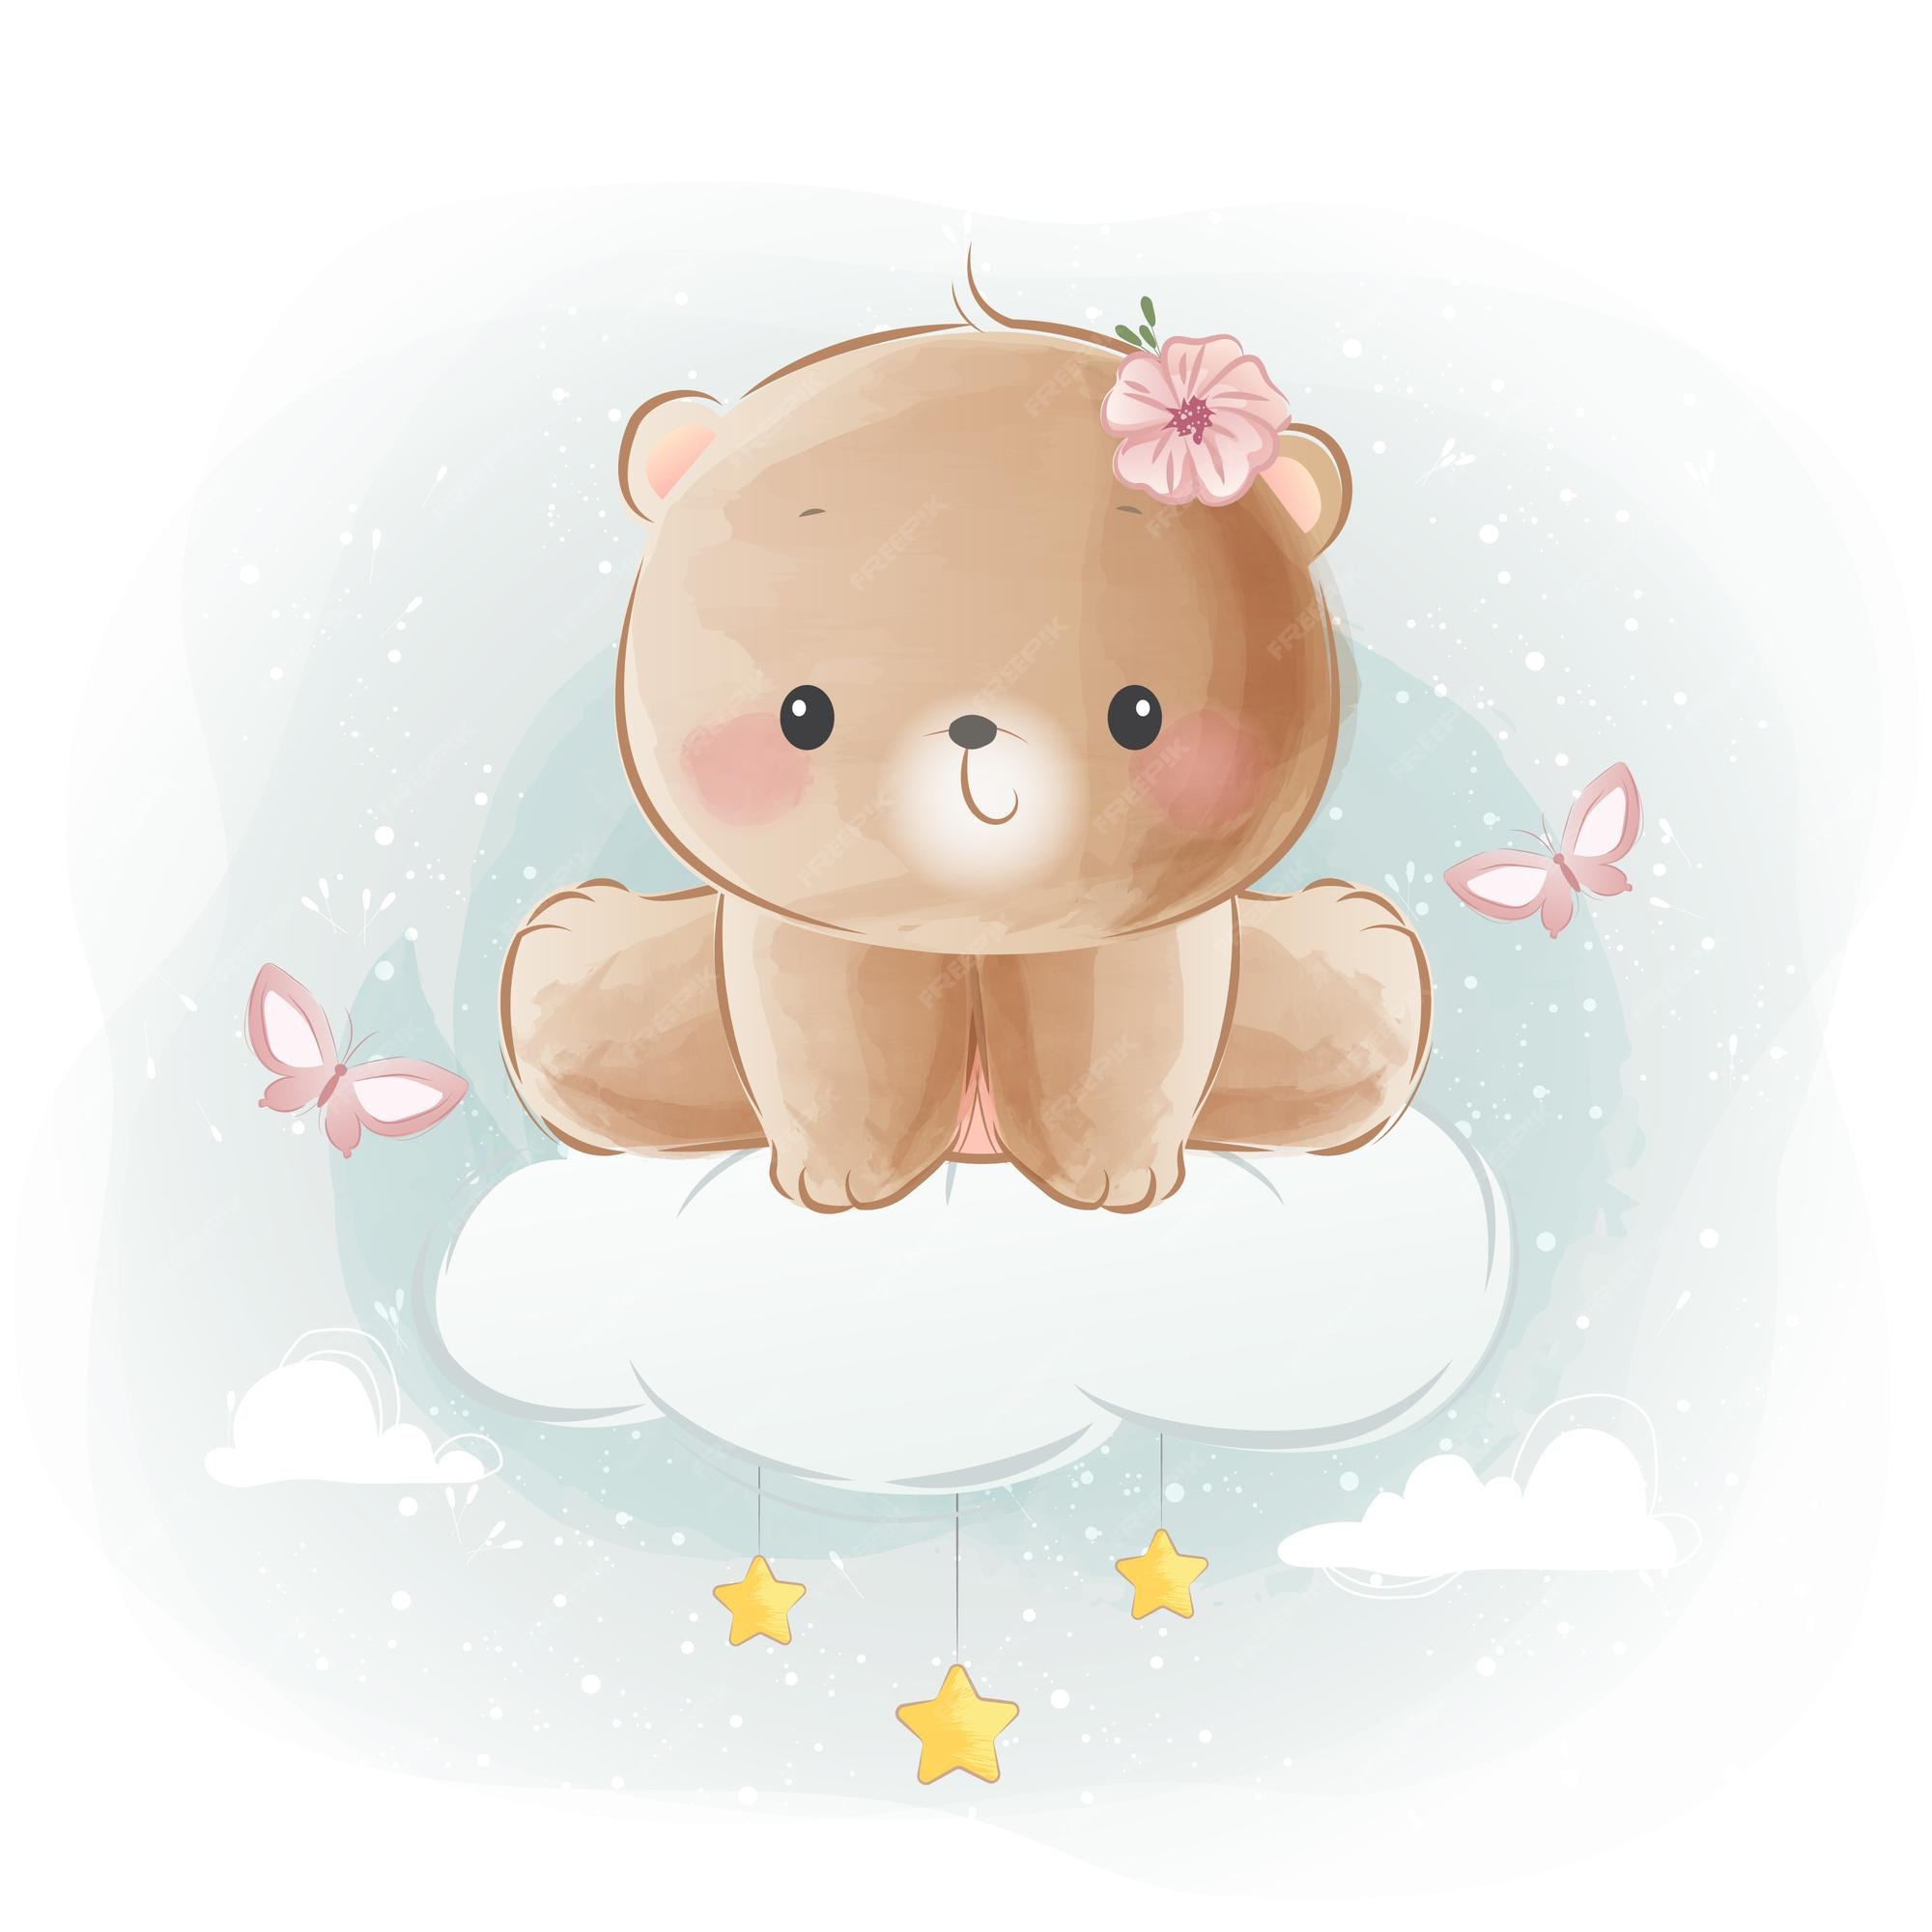 Premium Vector | Cute little bear sitting on cloud